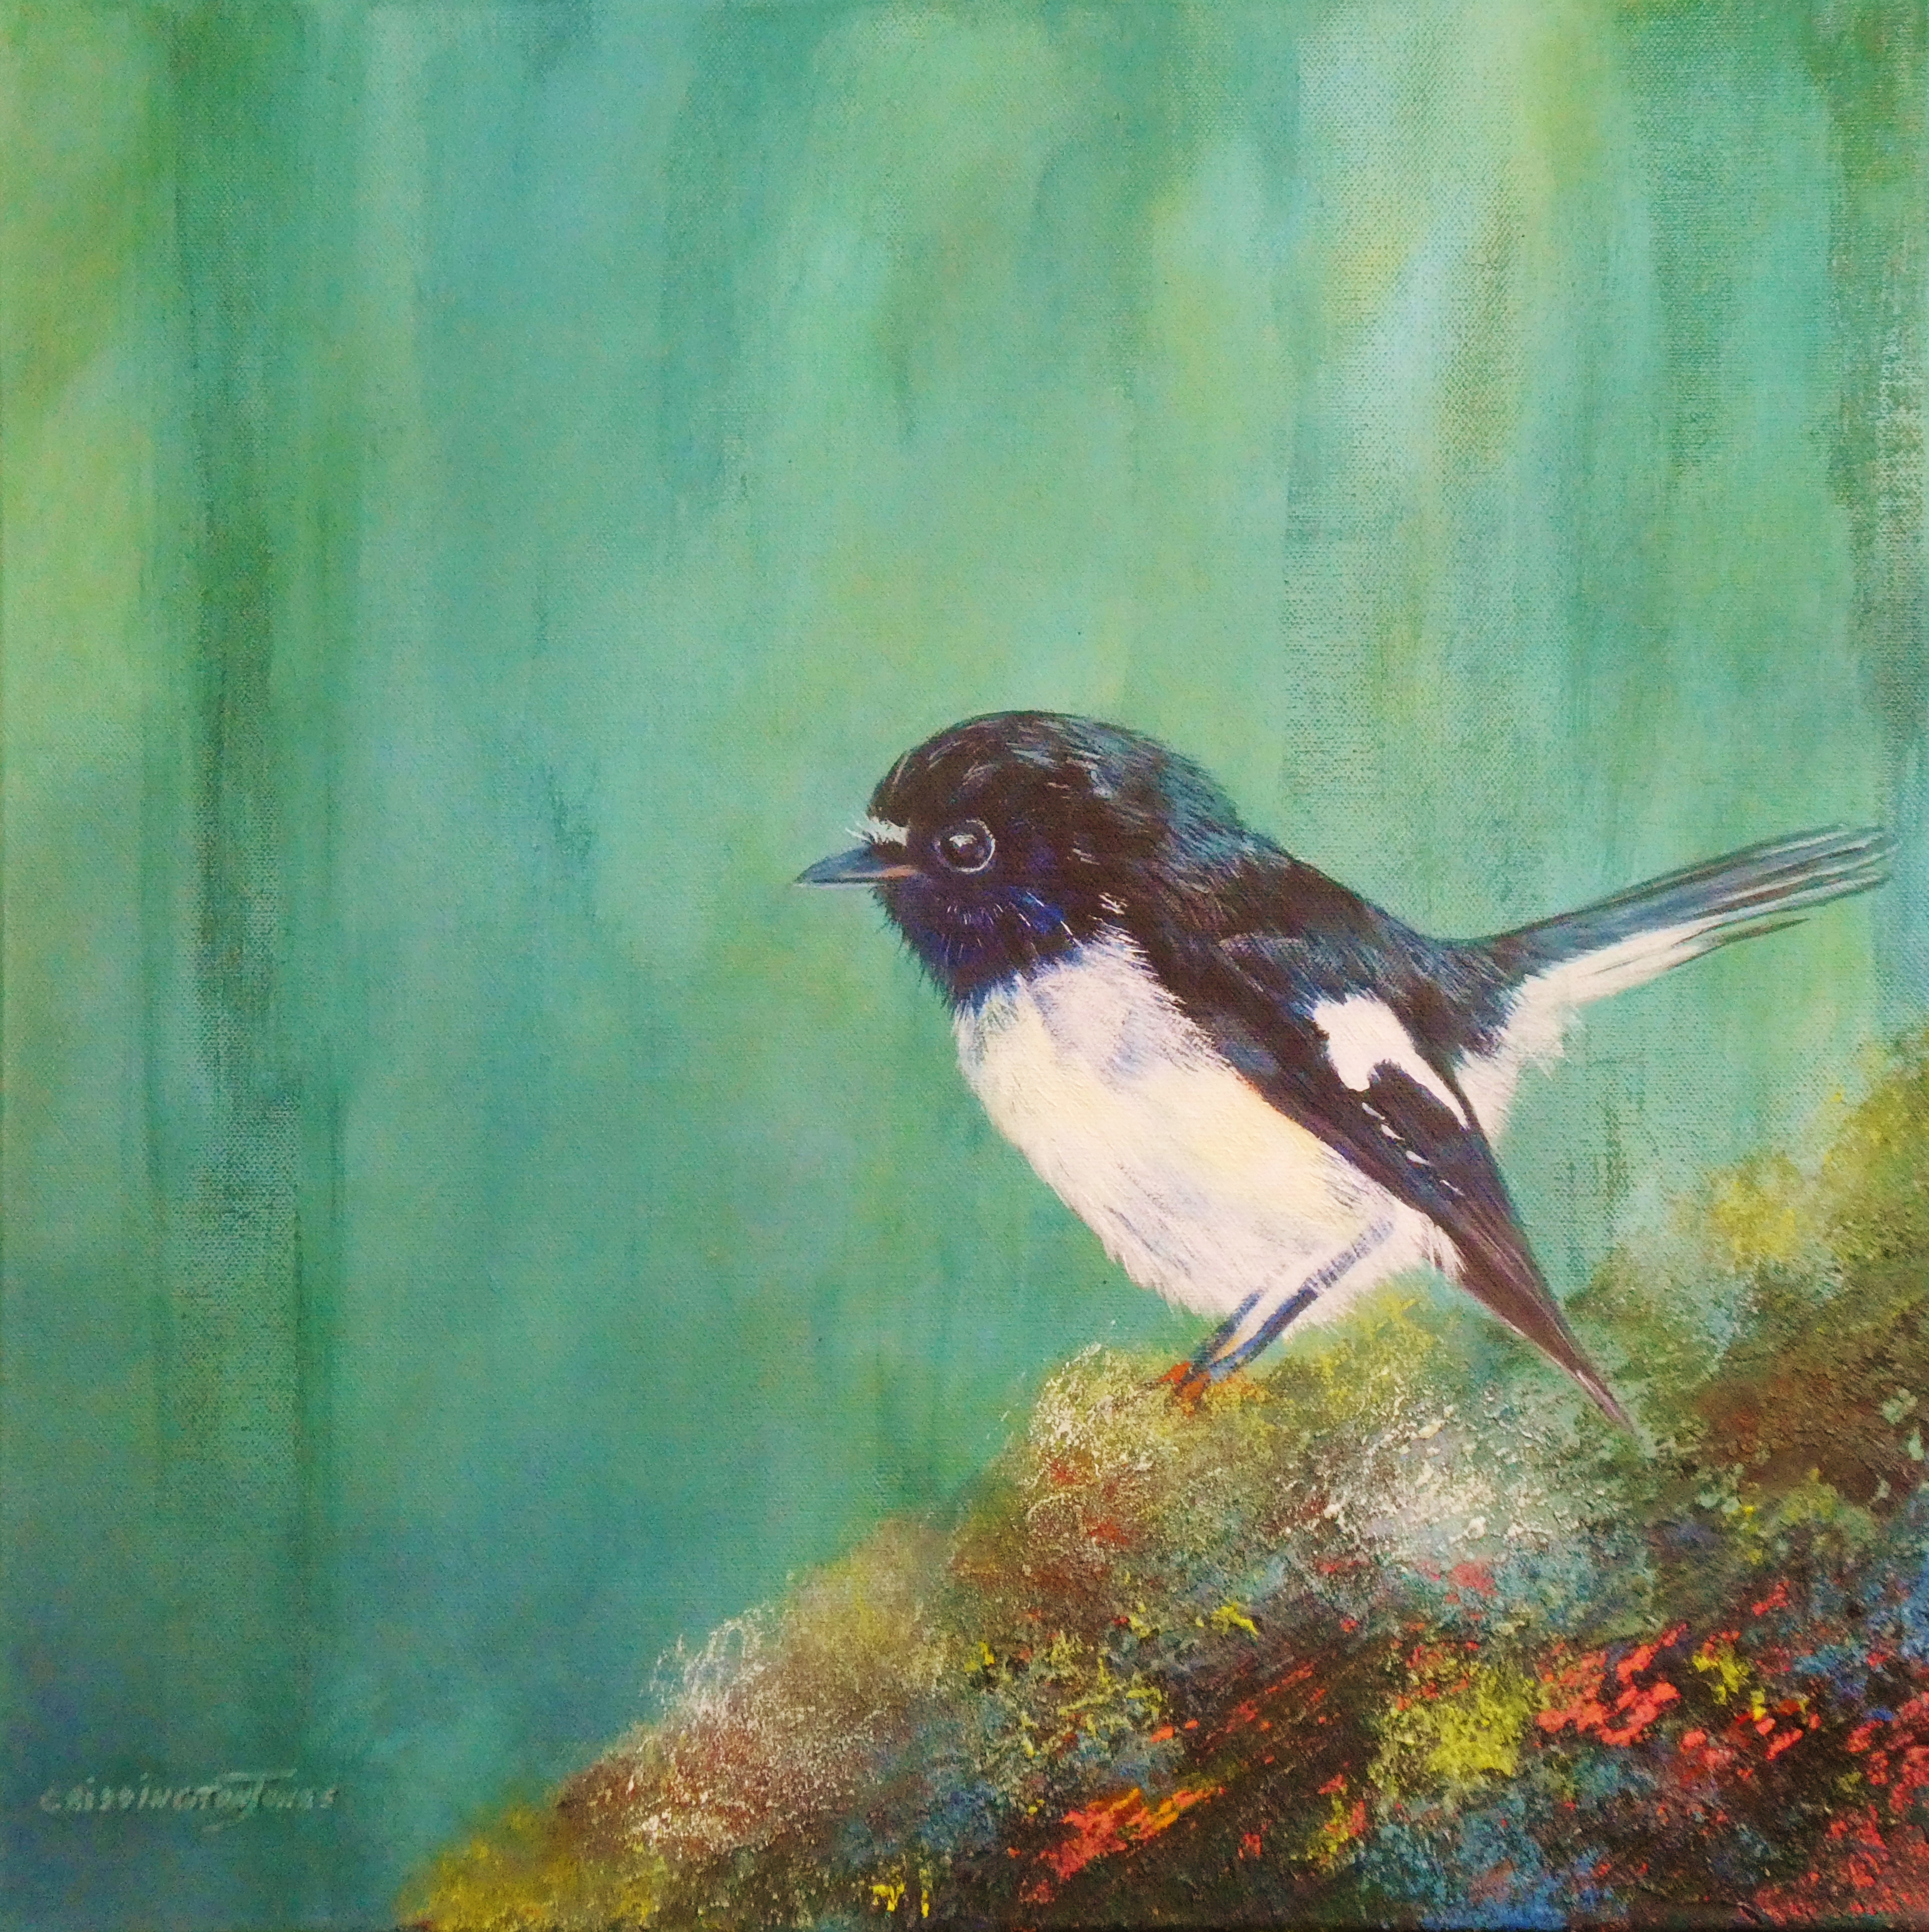 Painting of New Zealand native bird, Tom Tit by Clare Riddington Jones